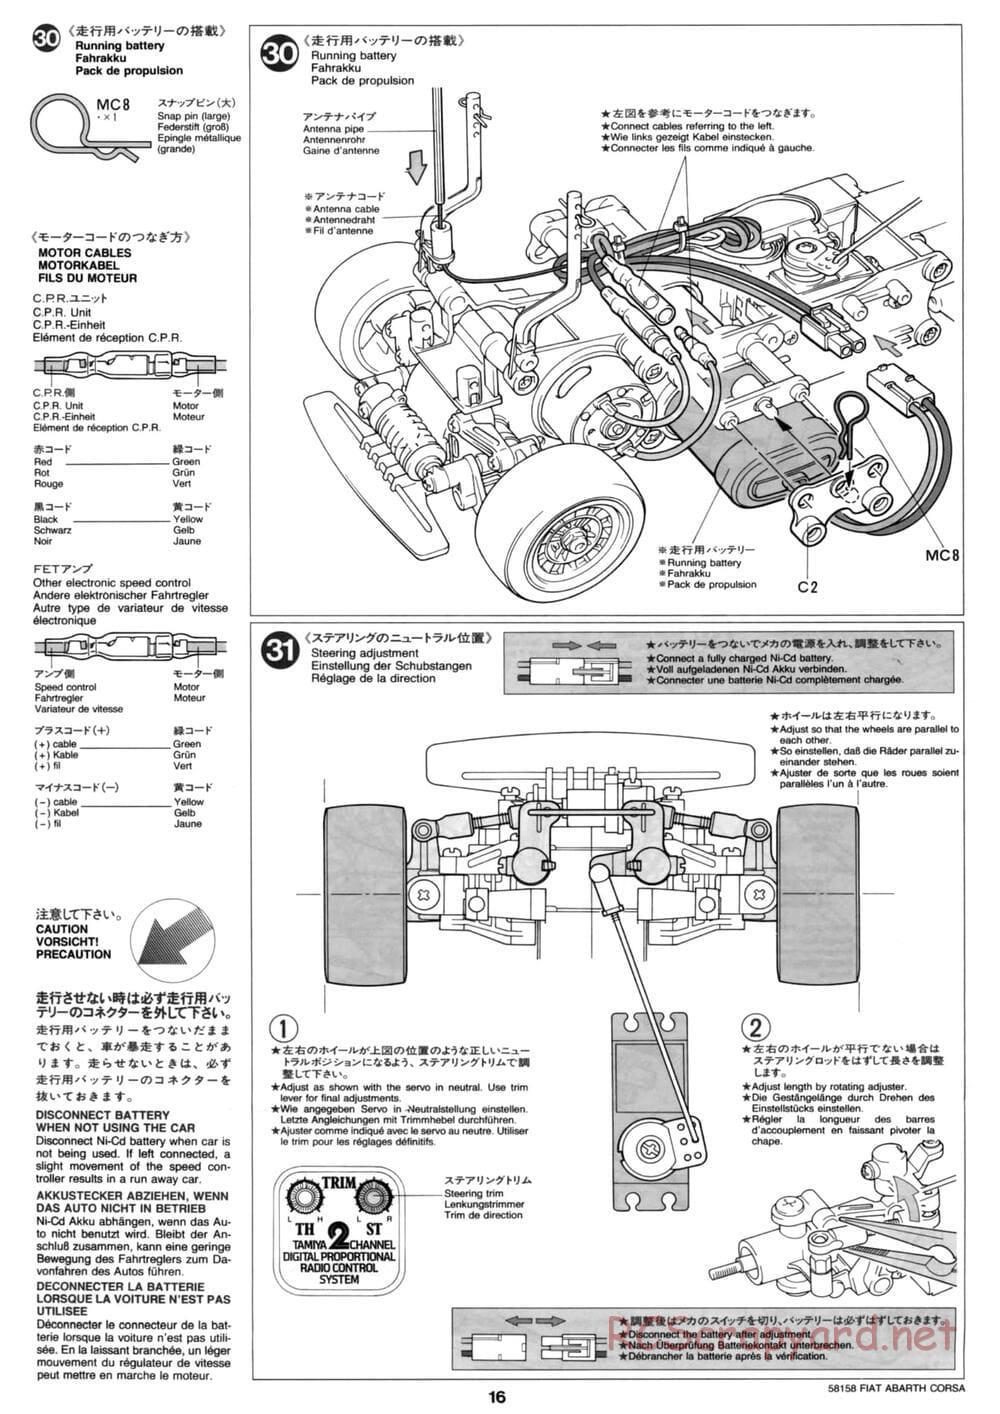 Tamiya - Fiat Abarth 1000 TCR Berlina Corse - M02 Chassis - Manual - Page 16